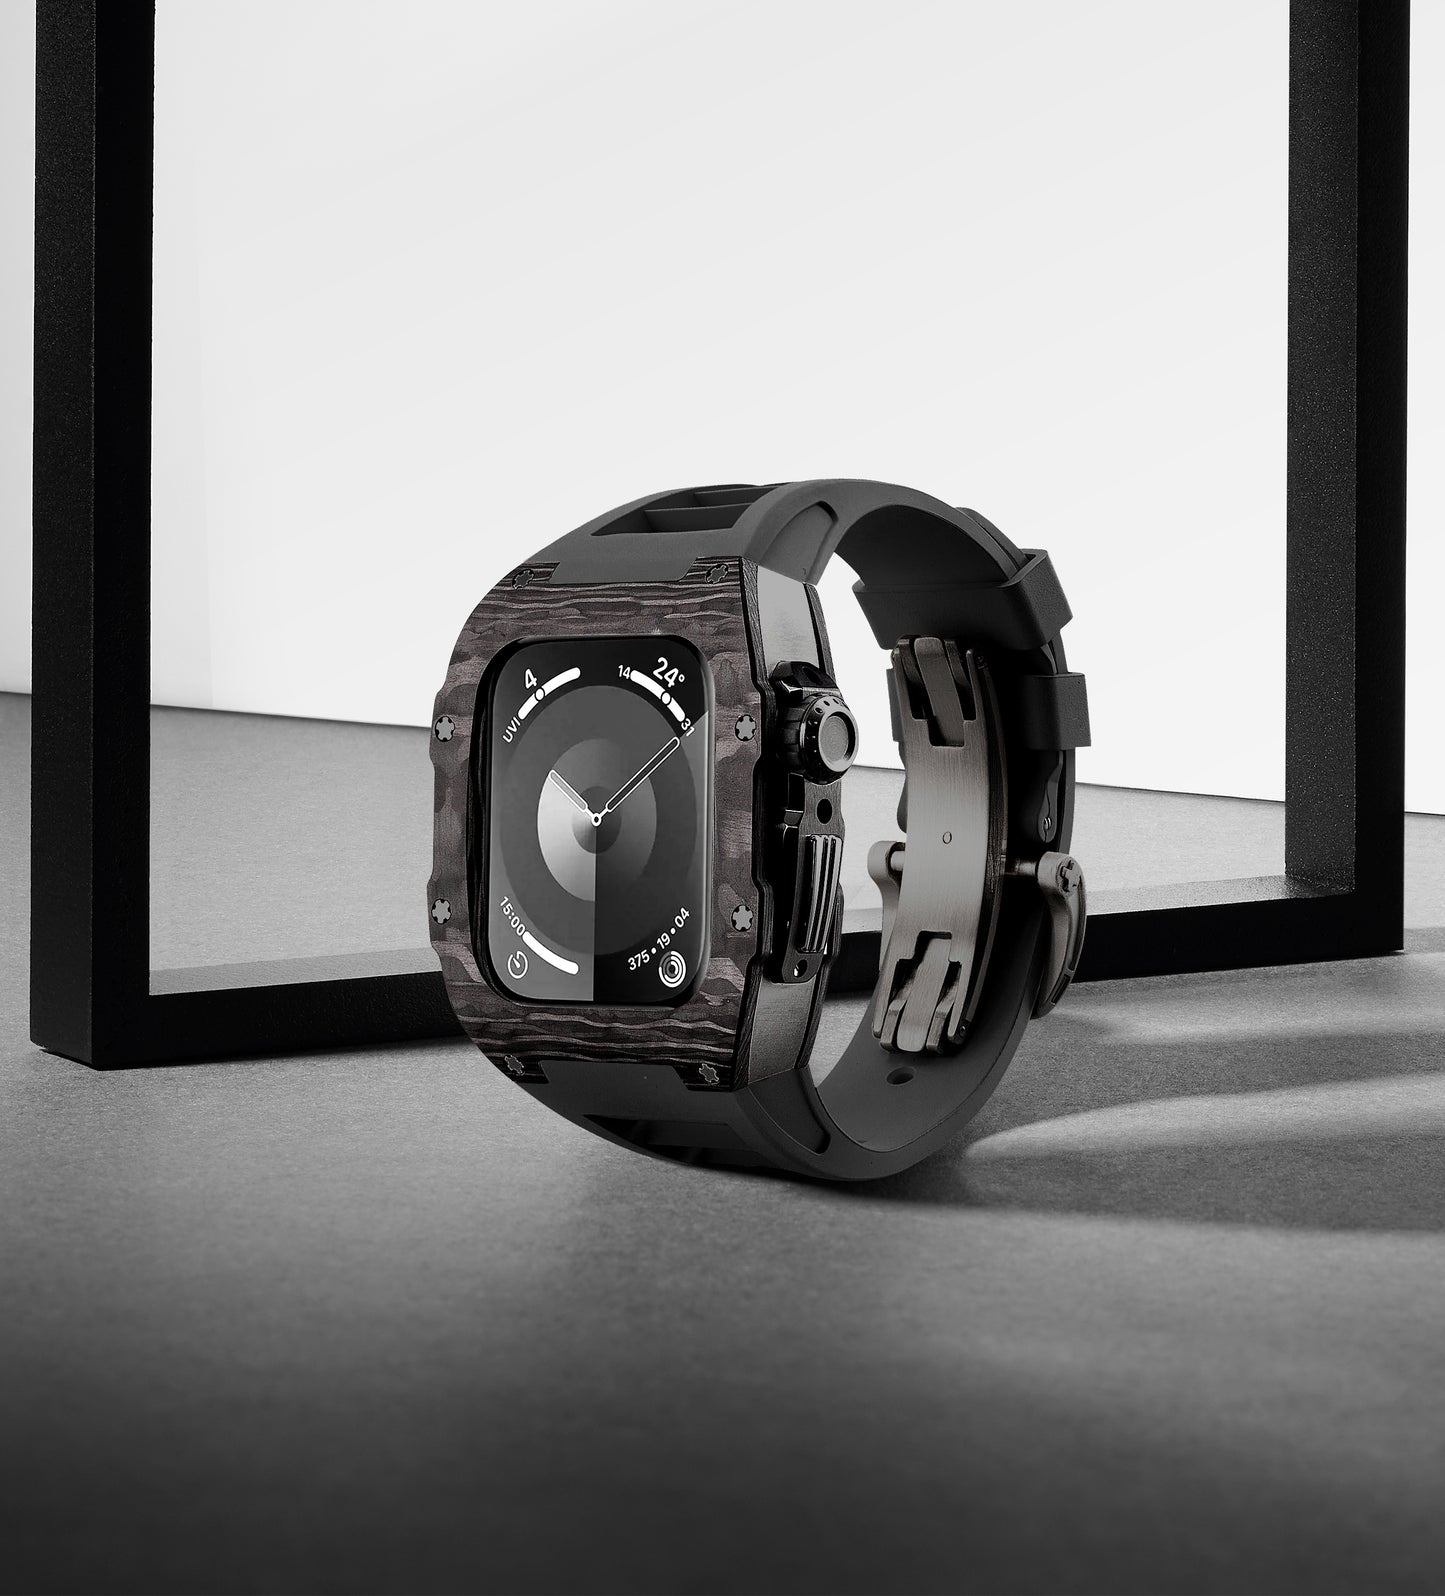 Apple Watch Case for Series 4/5/6/7/8/SE - Carbon Fiber Ti Case + Orange Fluoro Strap